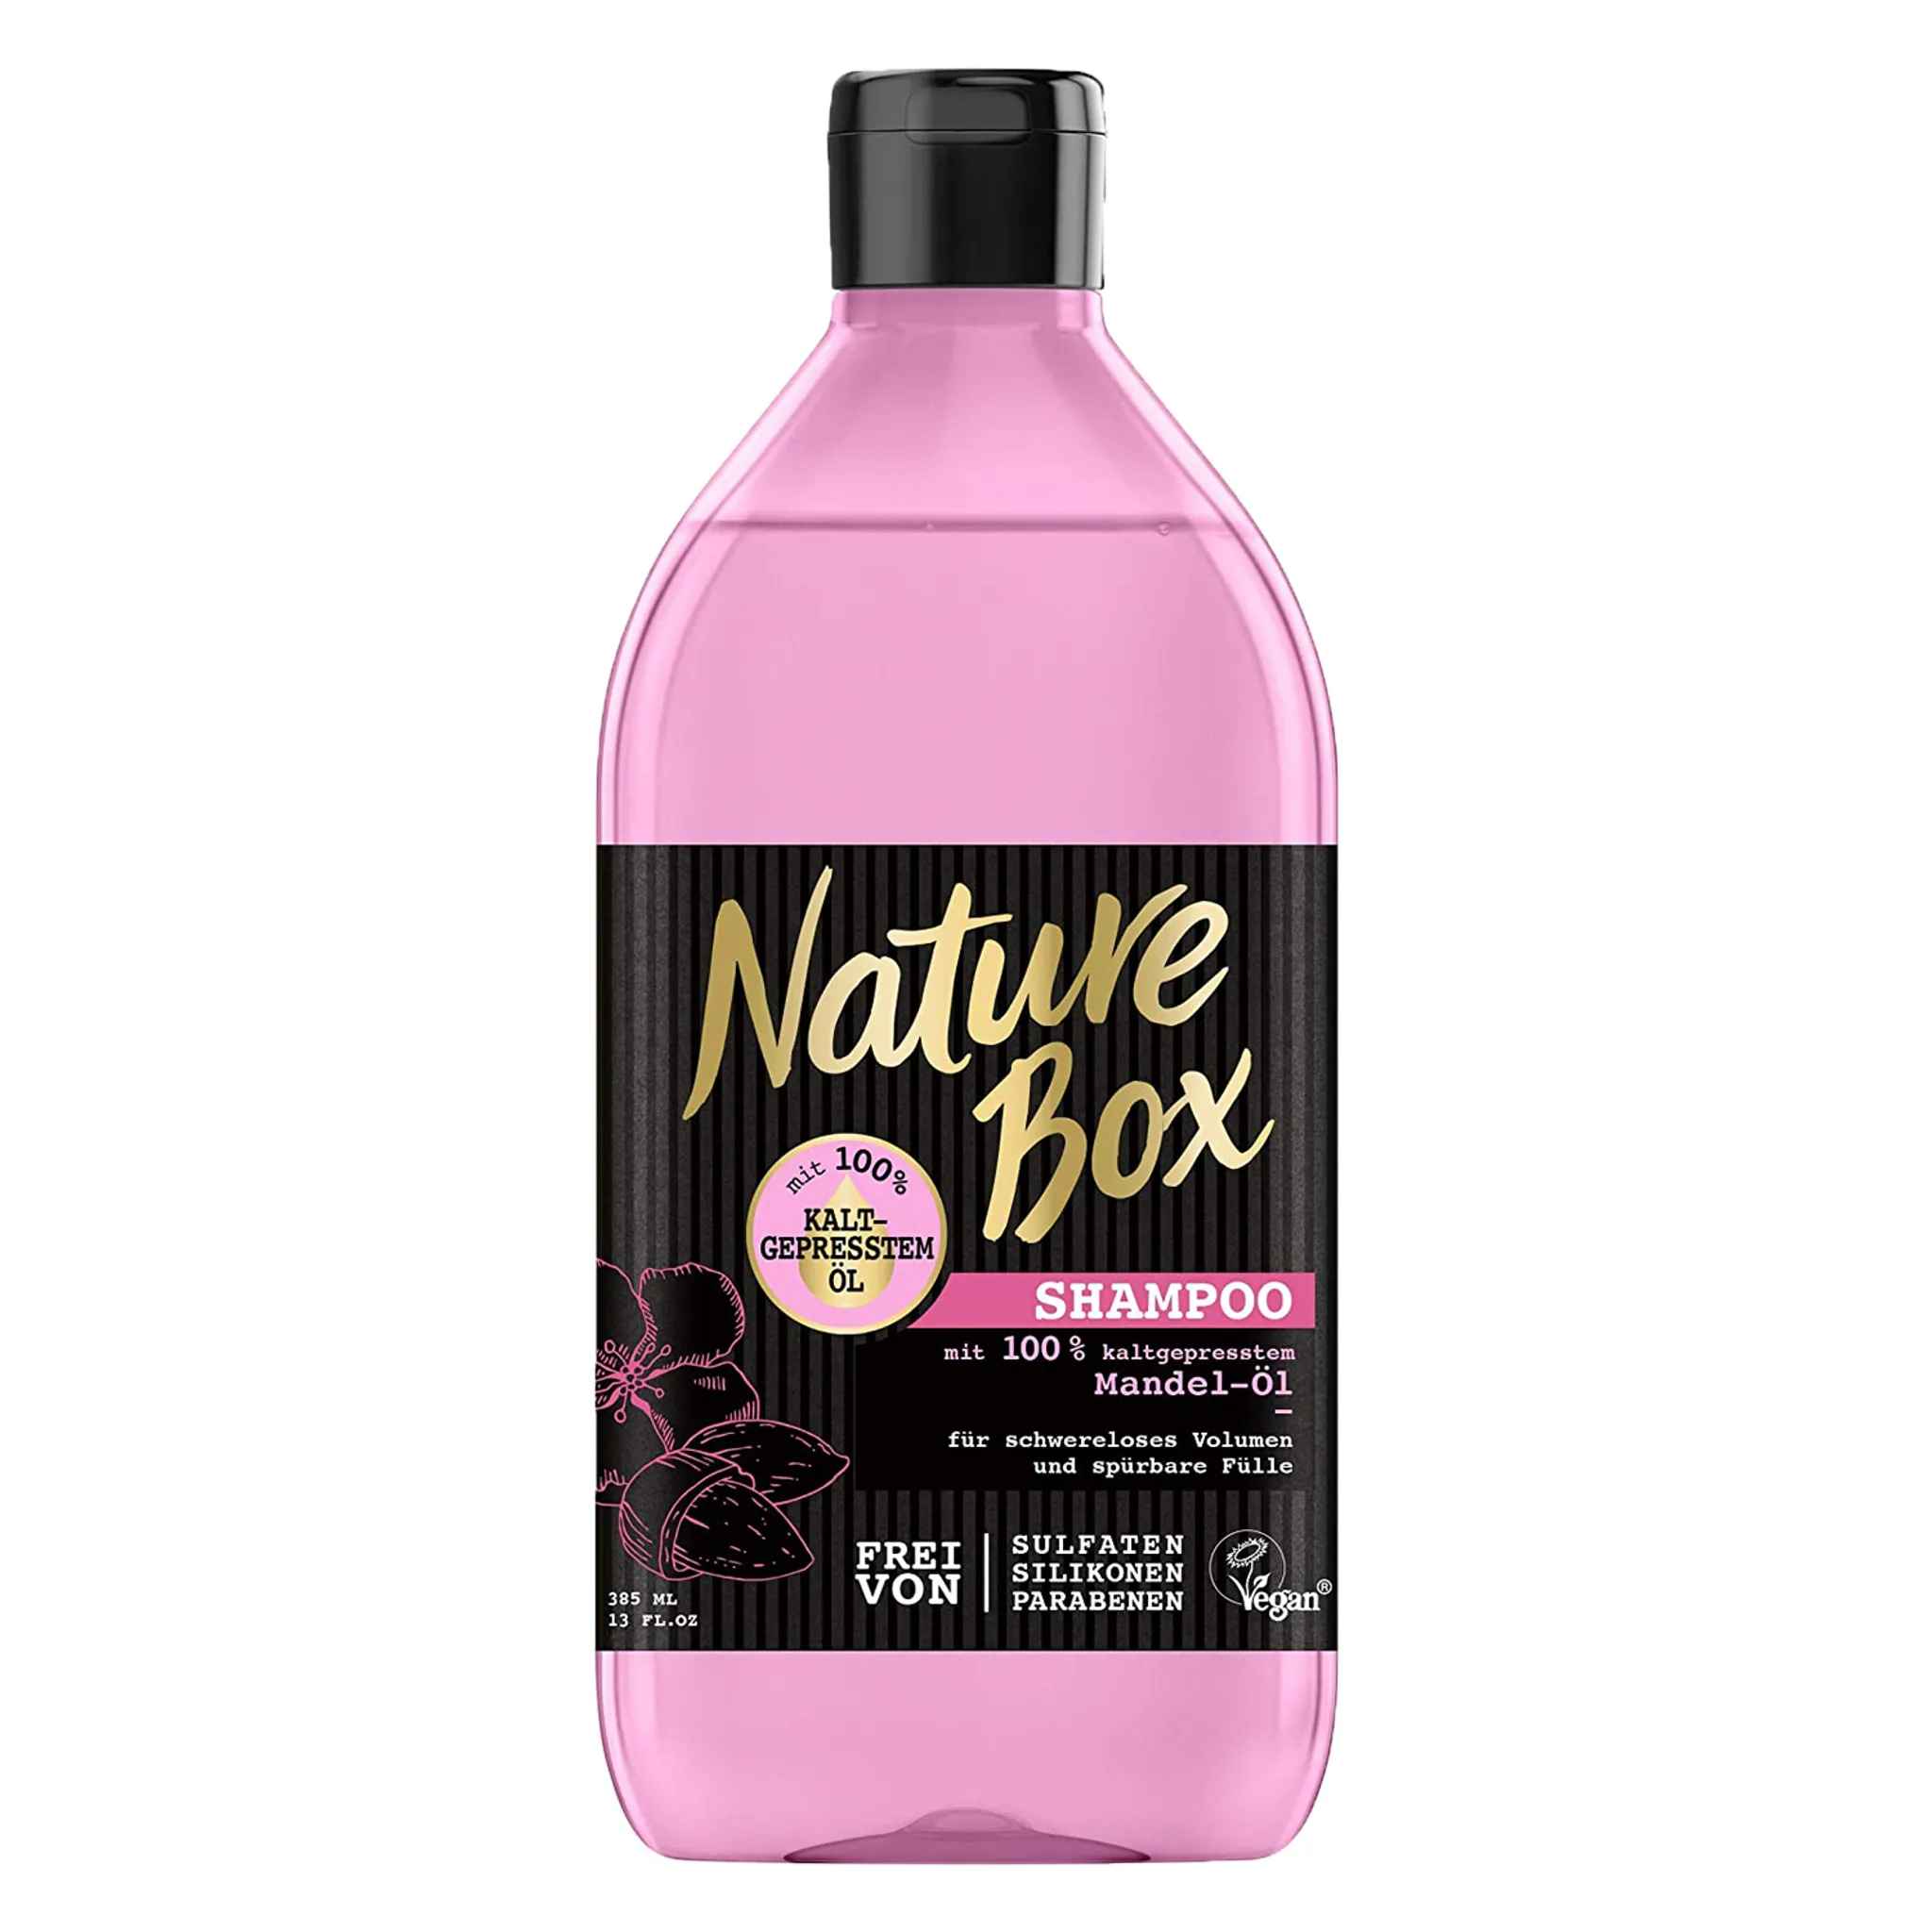 Natural box. Nature Box шампуни. Шампунь для волос женский с миндалем. Nature Box Avocado Oil Butter 200ml. Shampoo Box Packaging.